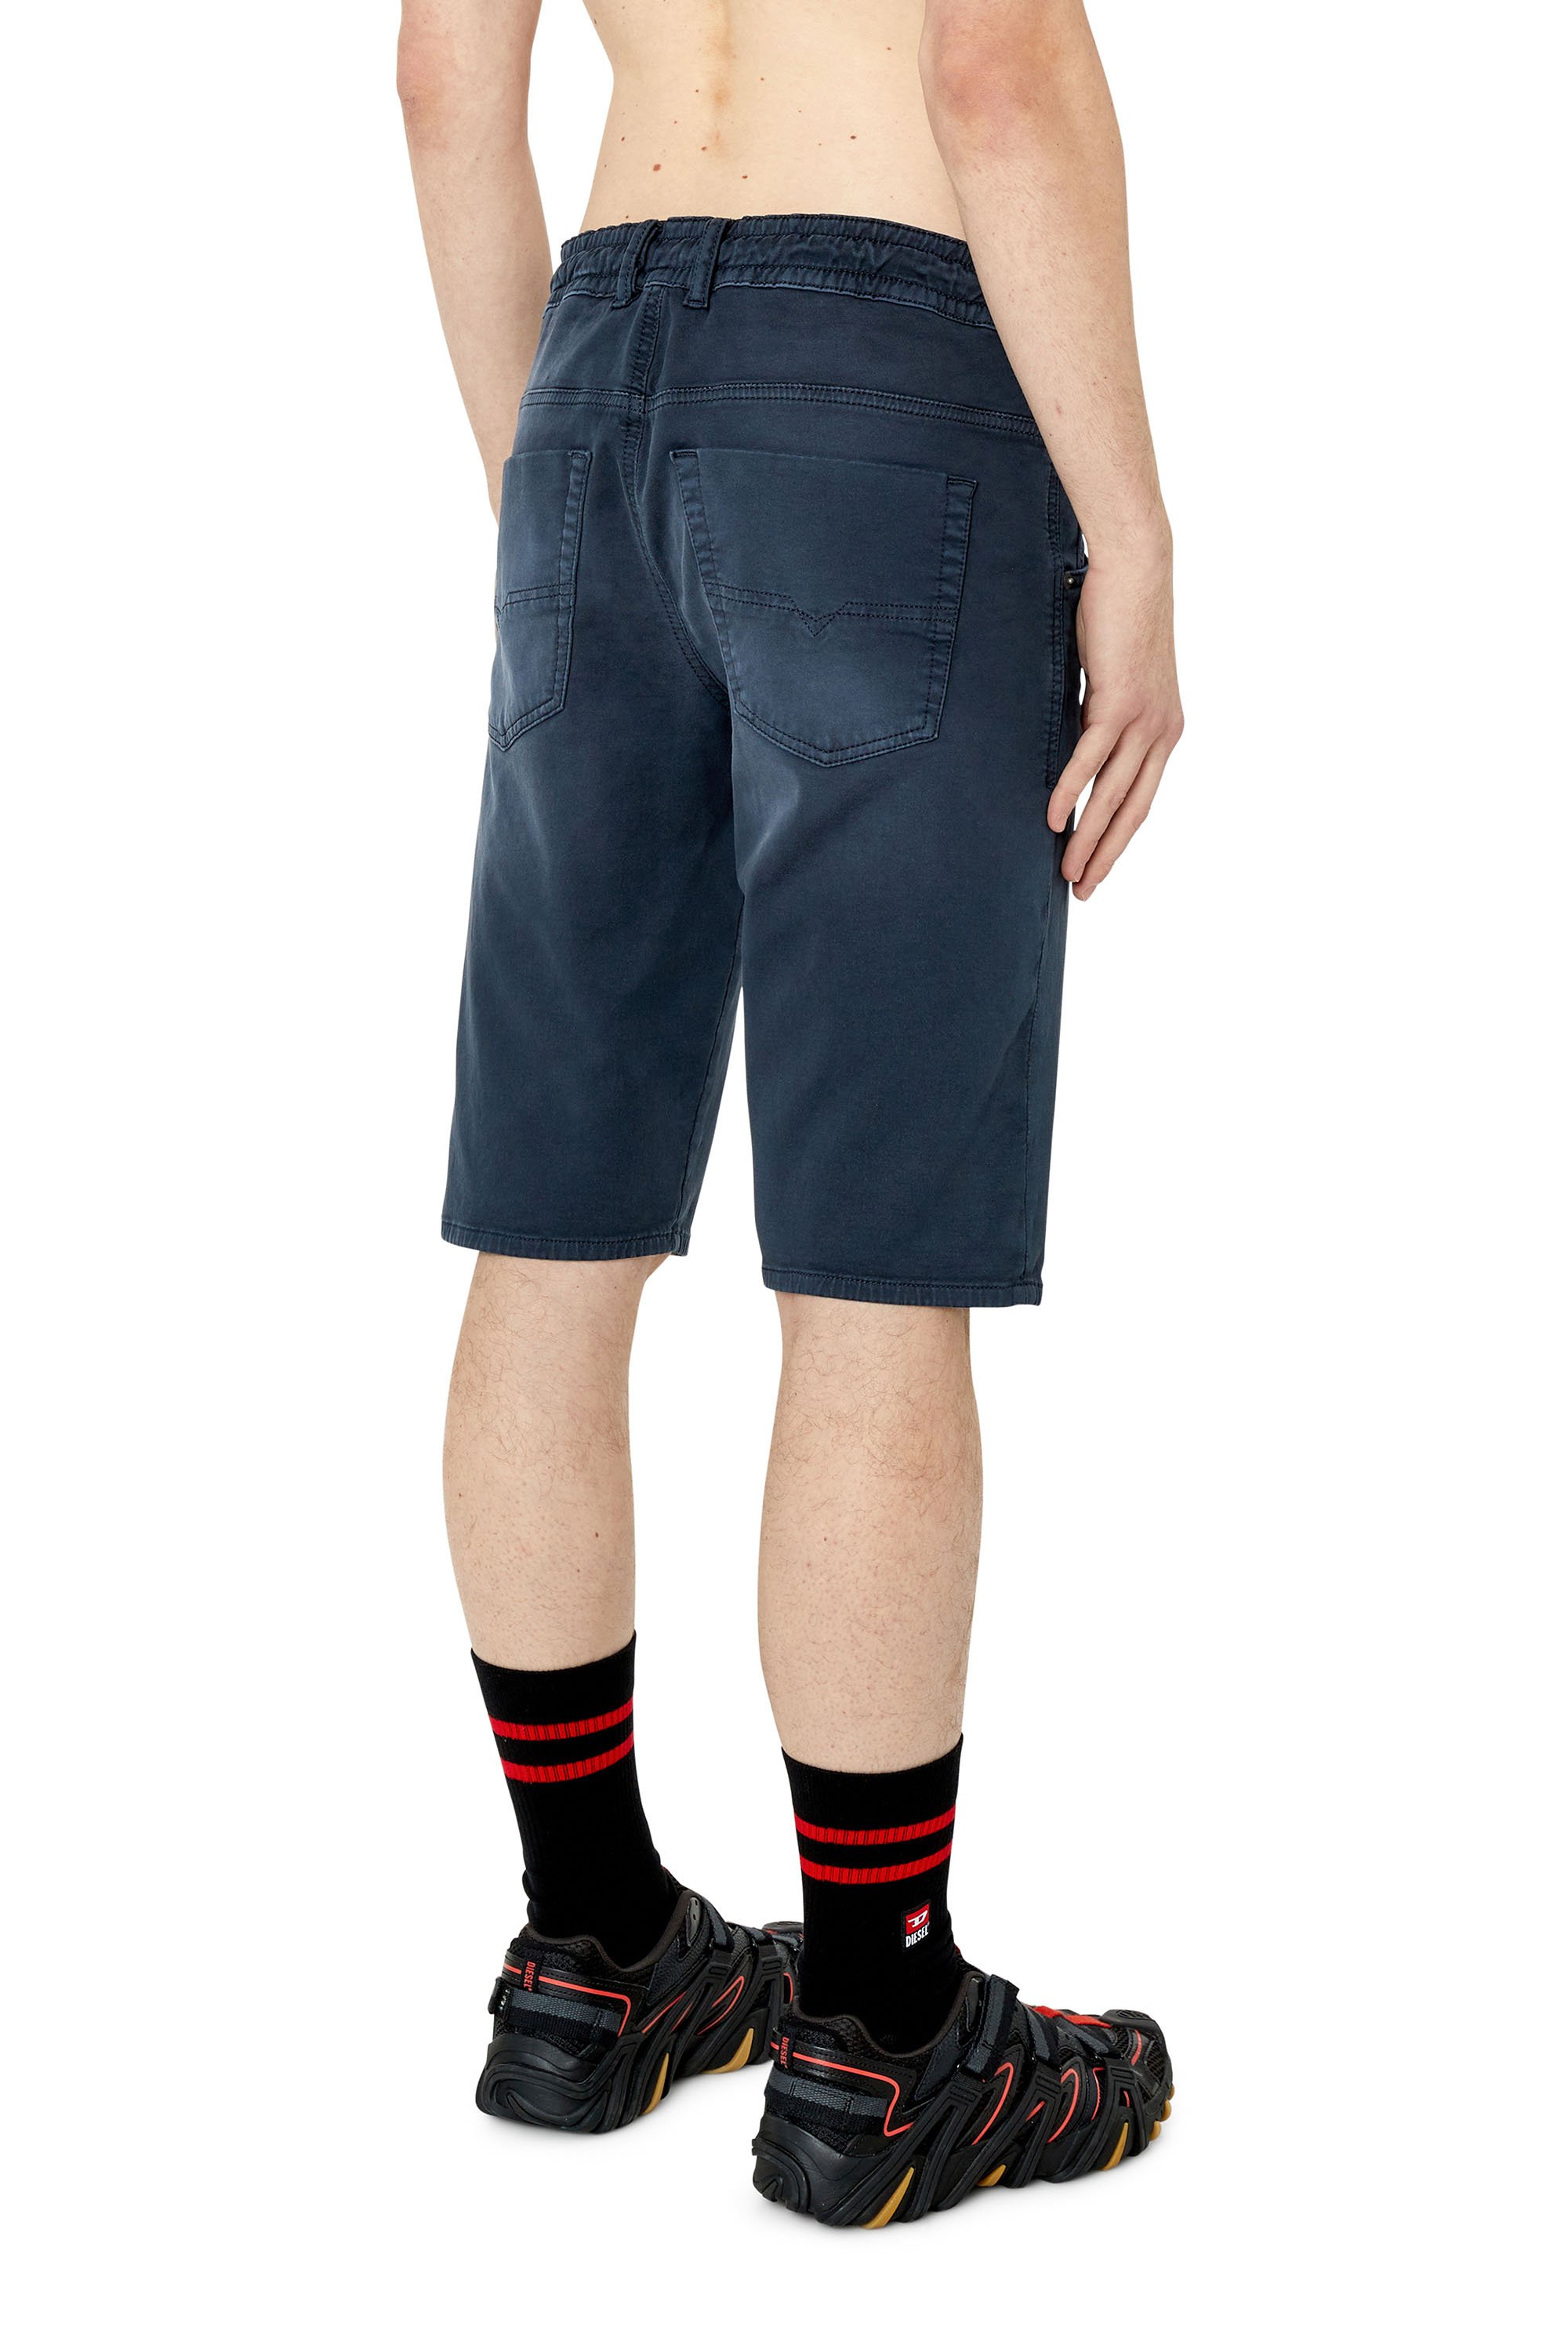 Diesel - D-KROOSHORT-Z JOGGJEANS, Hombre Pantalones cortos de color de JoggJeans® in Azul marino - Image 2